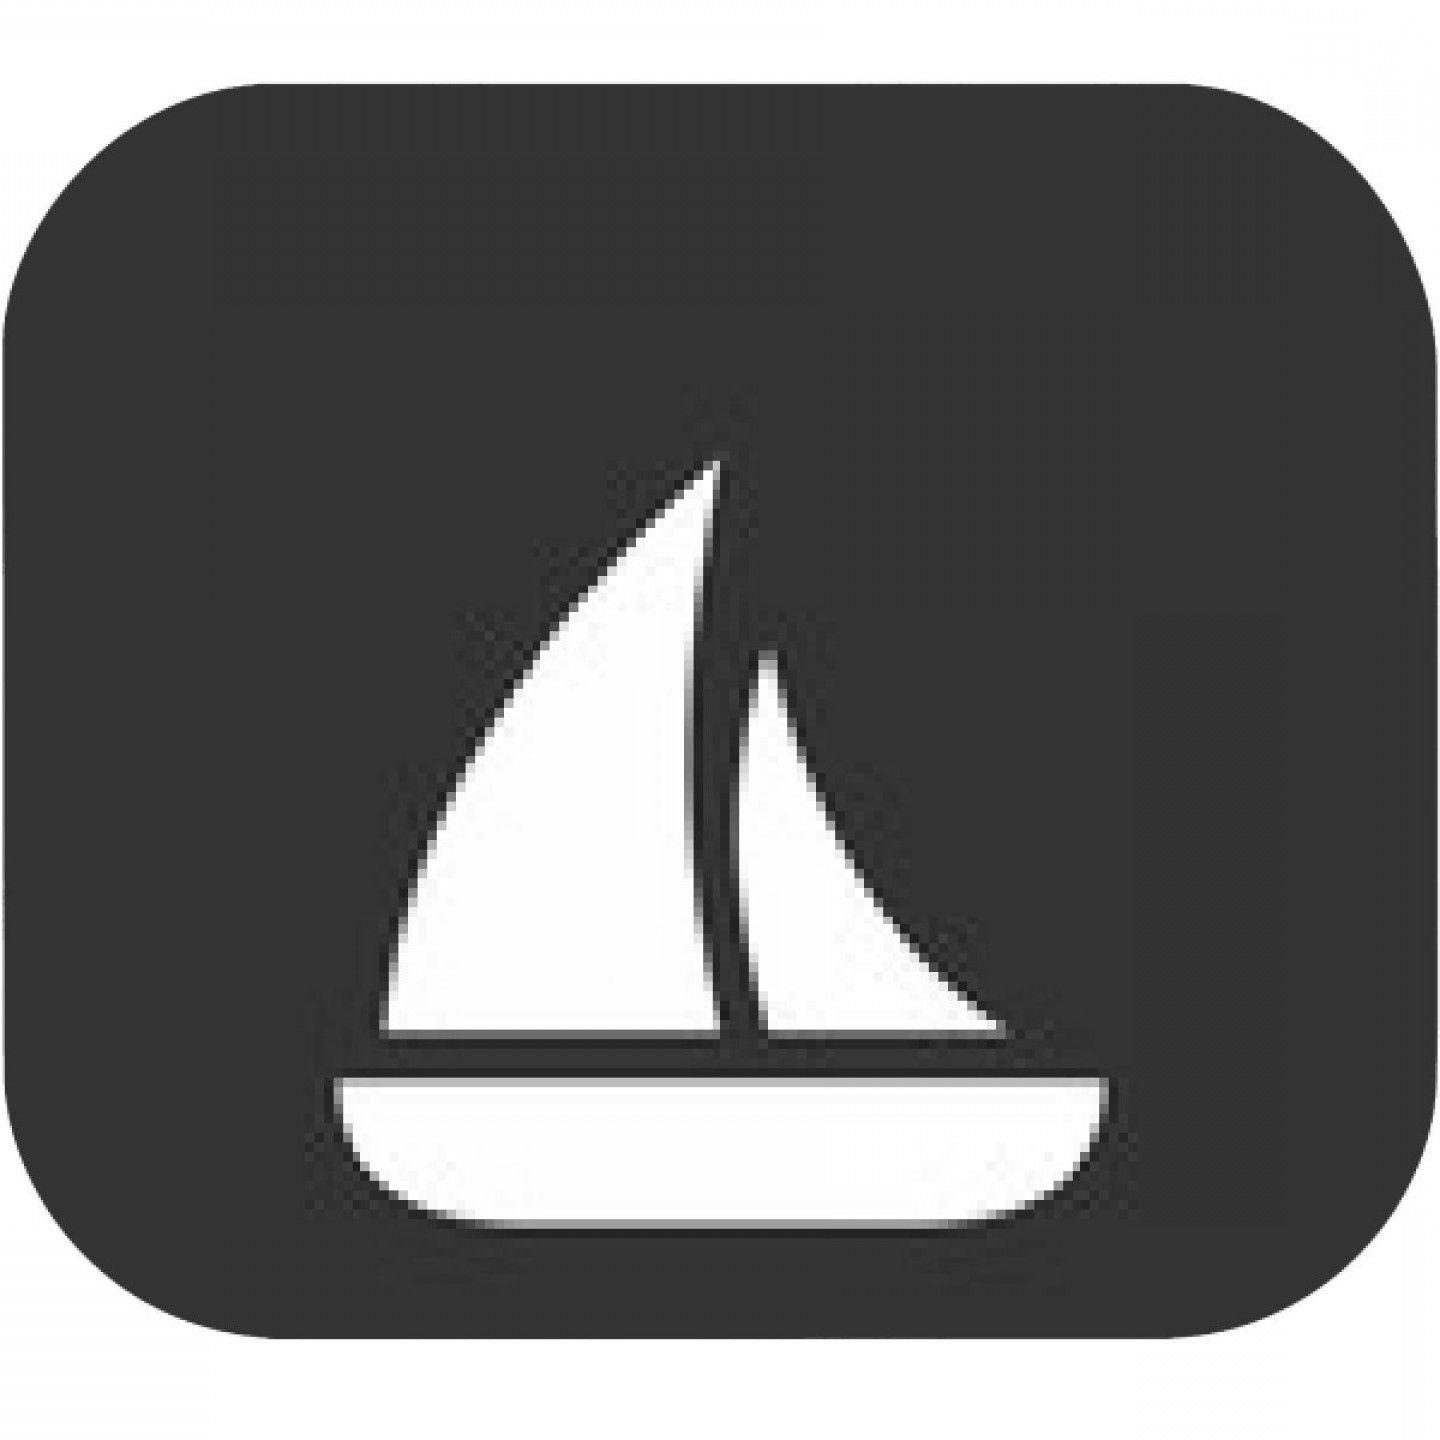 Black Sailboat Logo - Vector Graphical Black Representation Of Silhouette A Sailboat